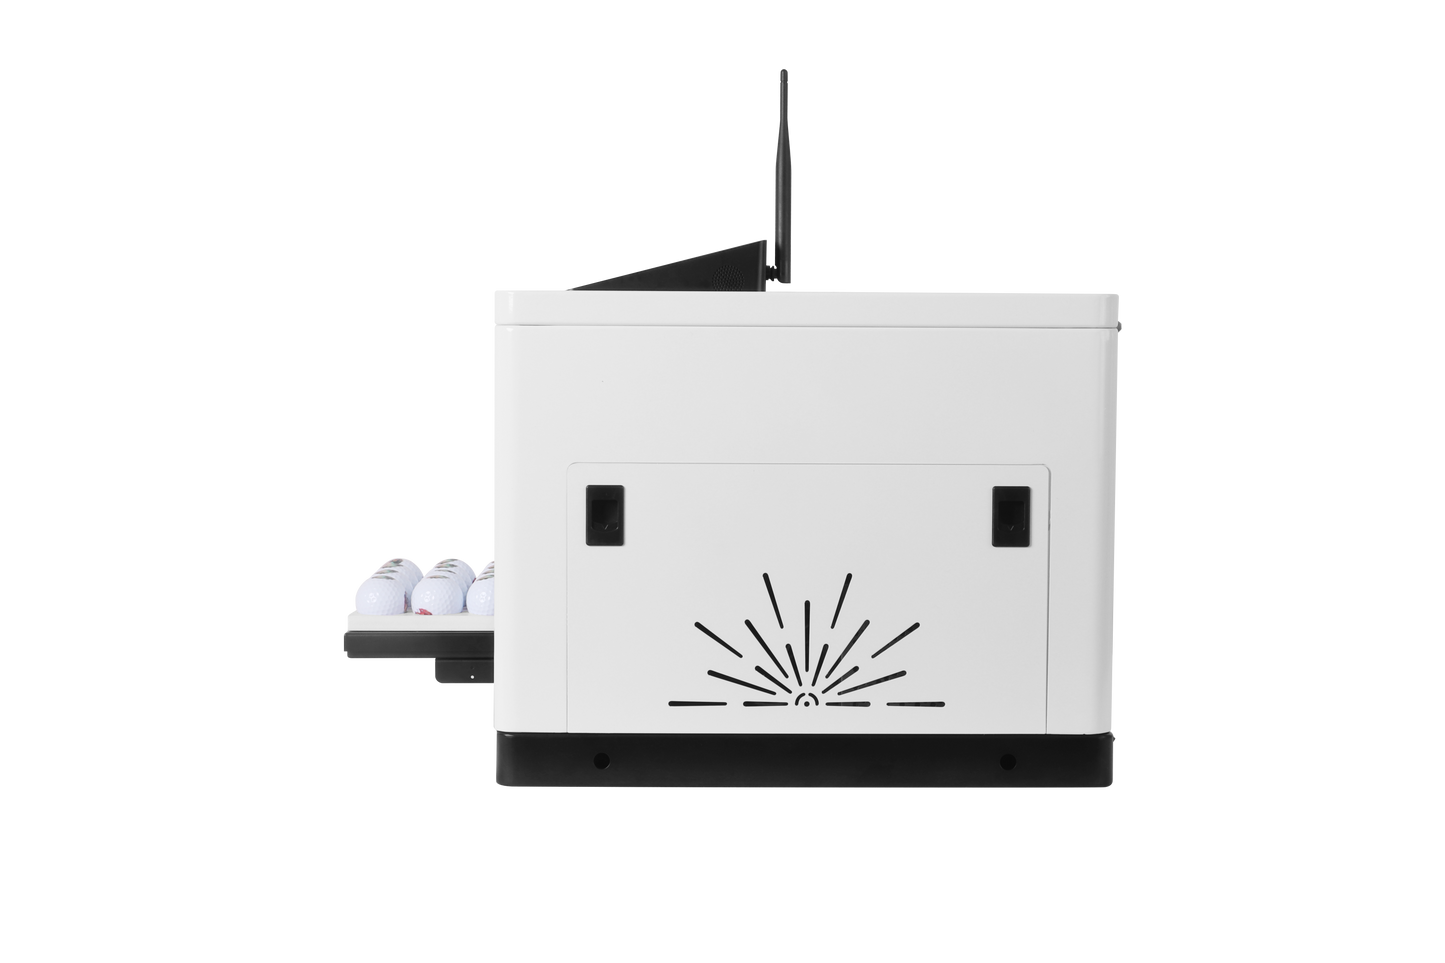 GF-1 Smart Golf Ball UV Printer